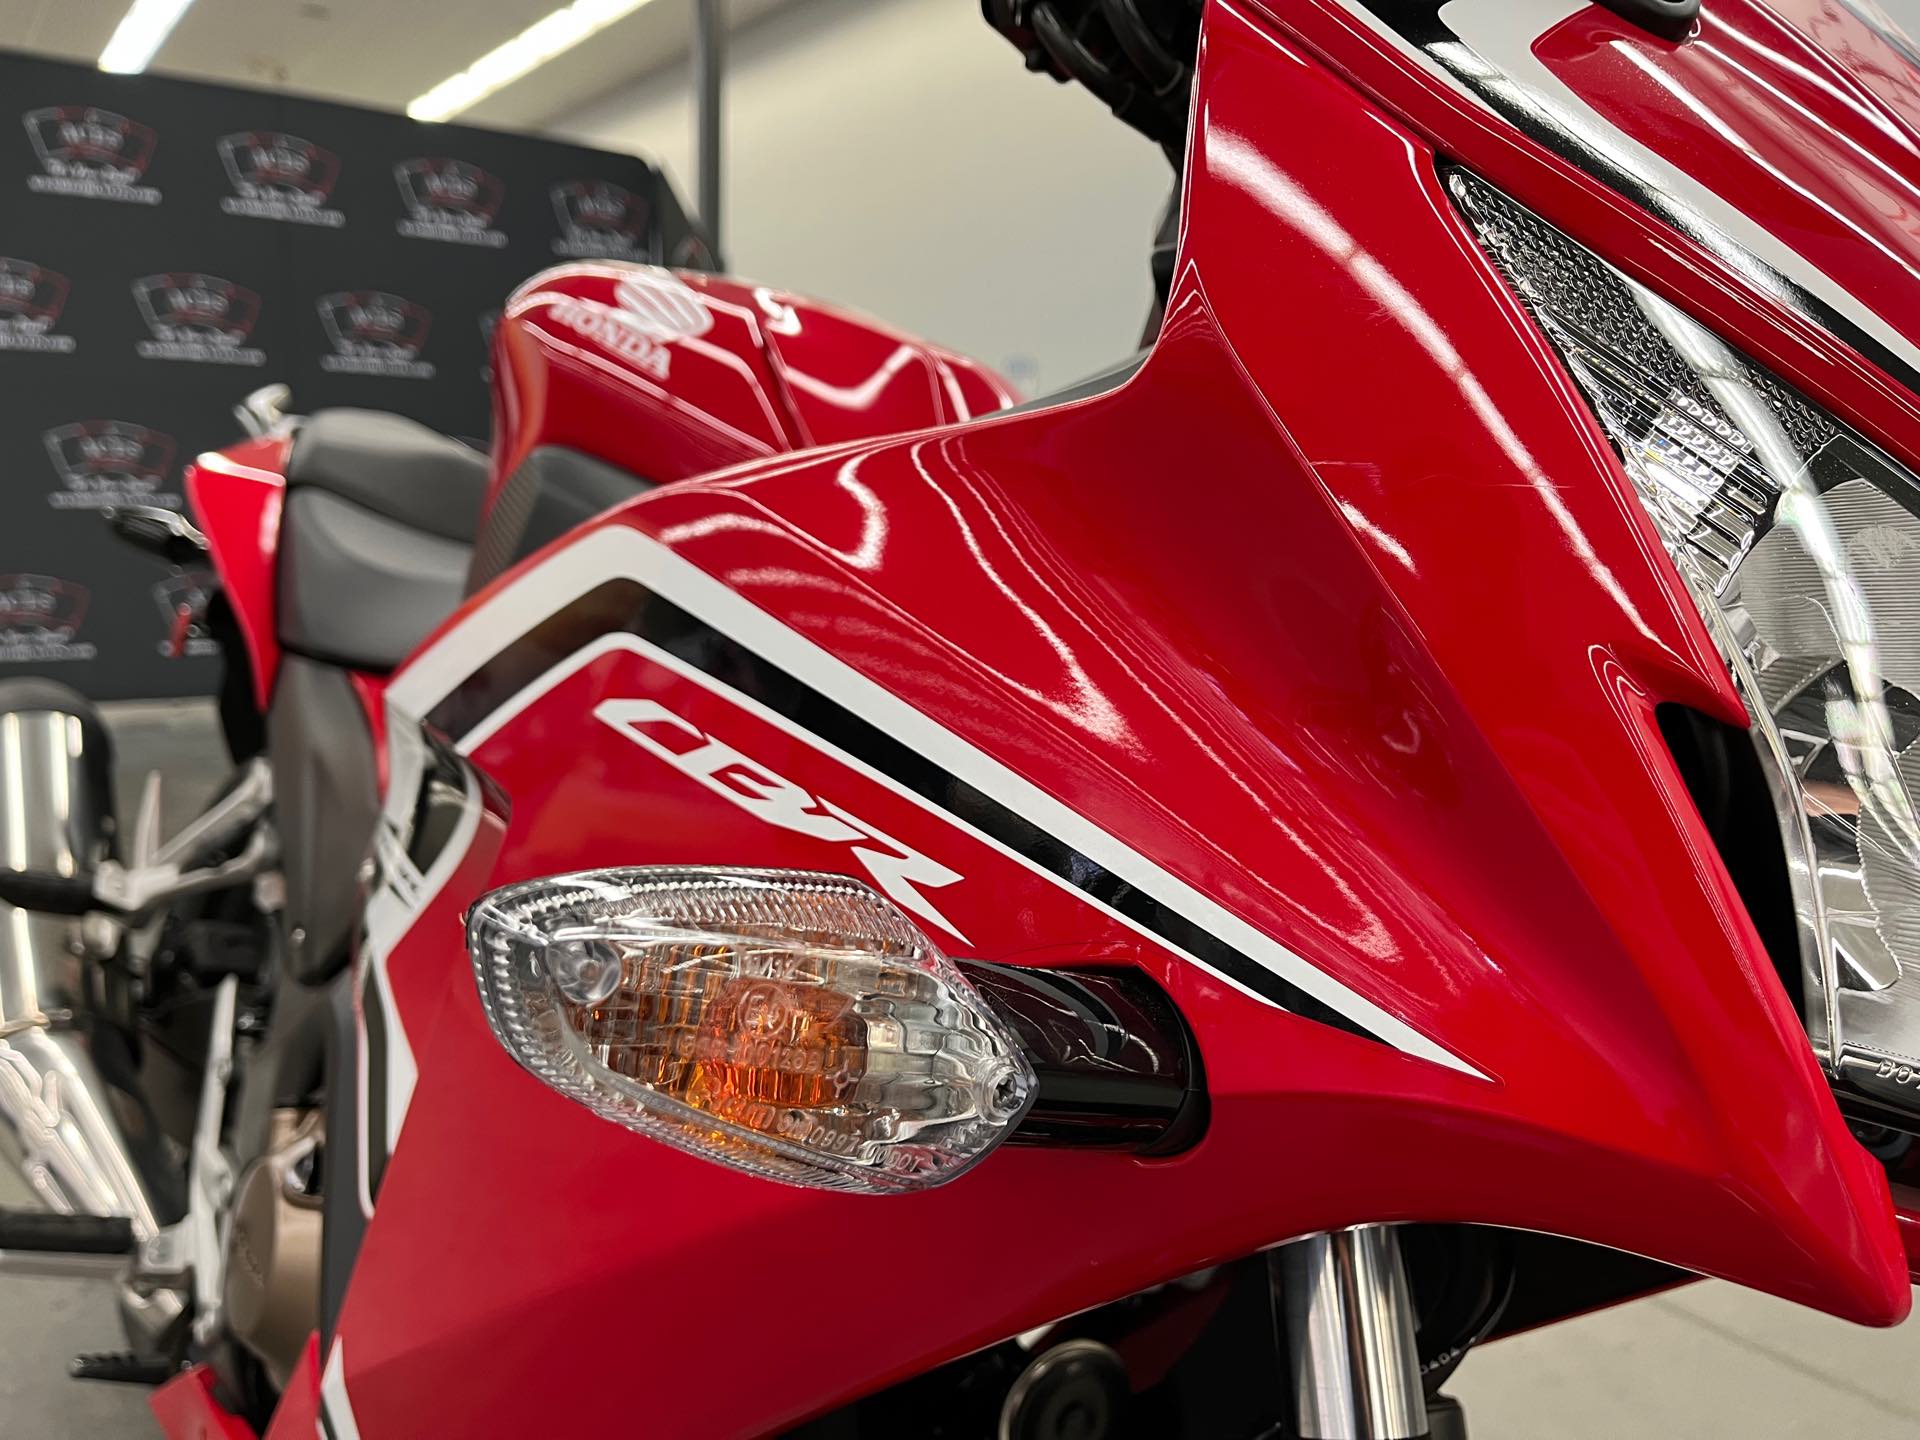 2022 Honda CBR300R ABS at Aces Motorcycles - Denver